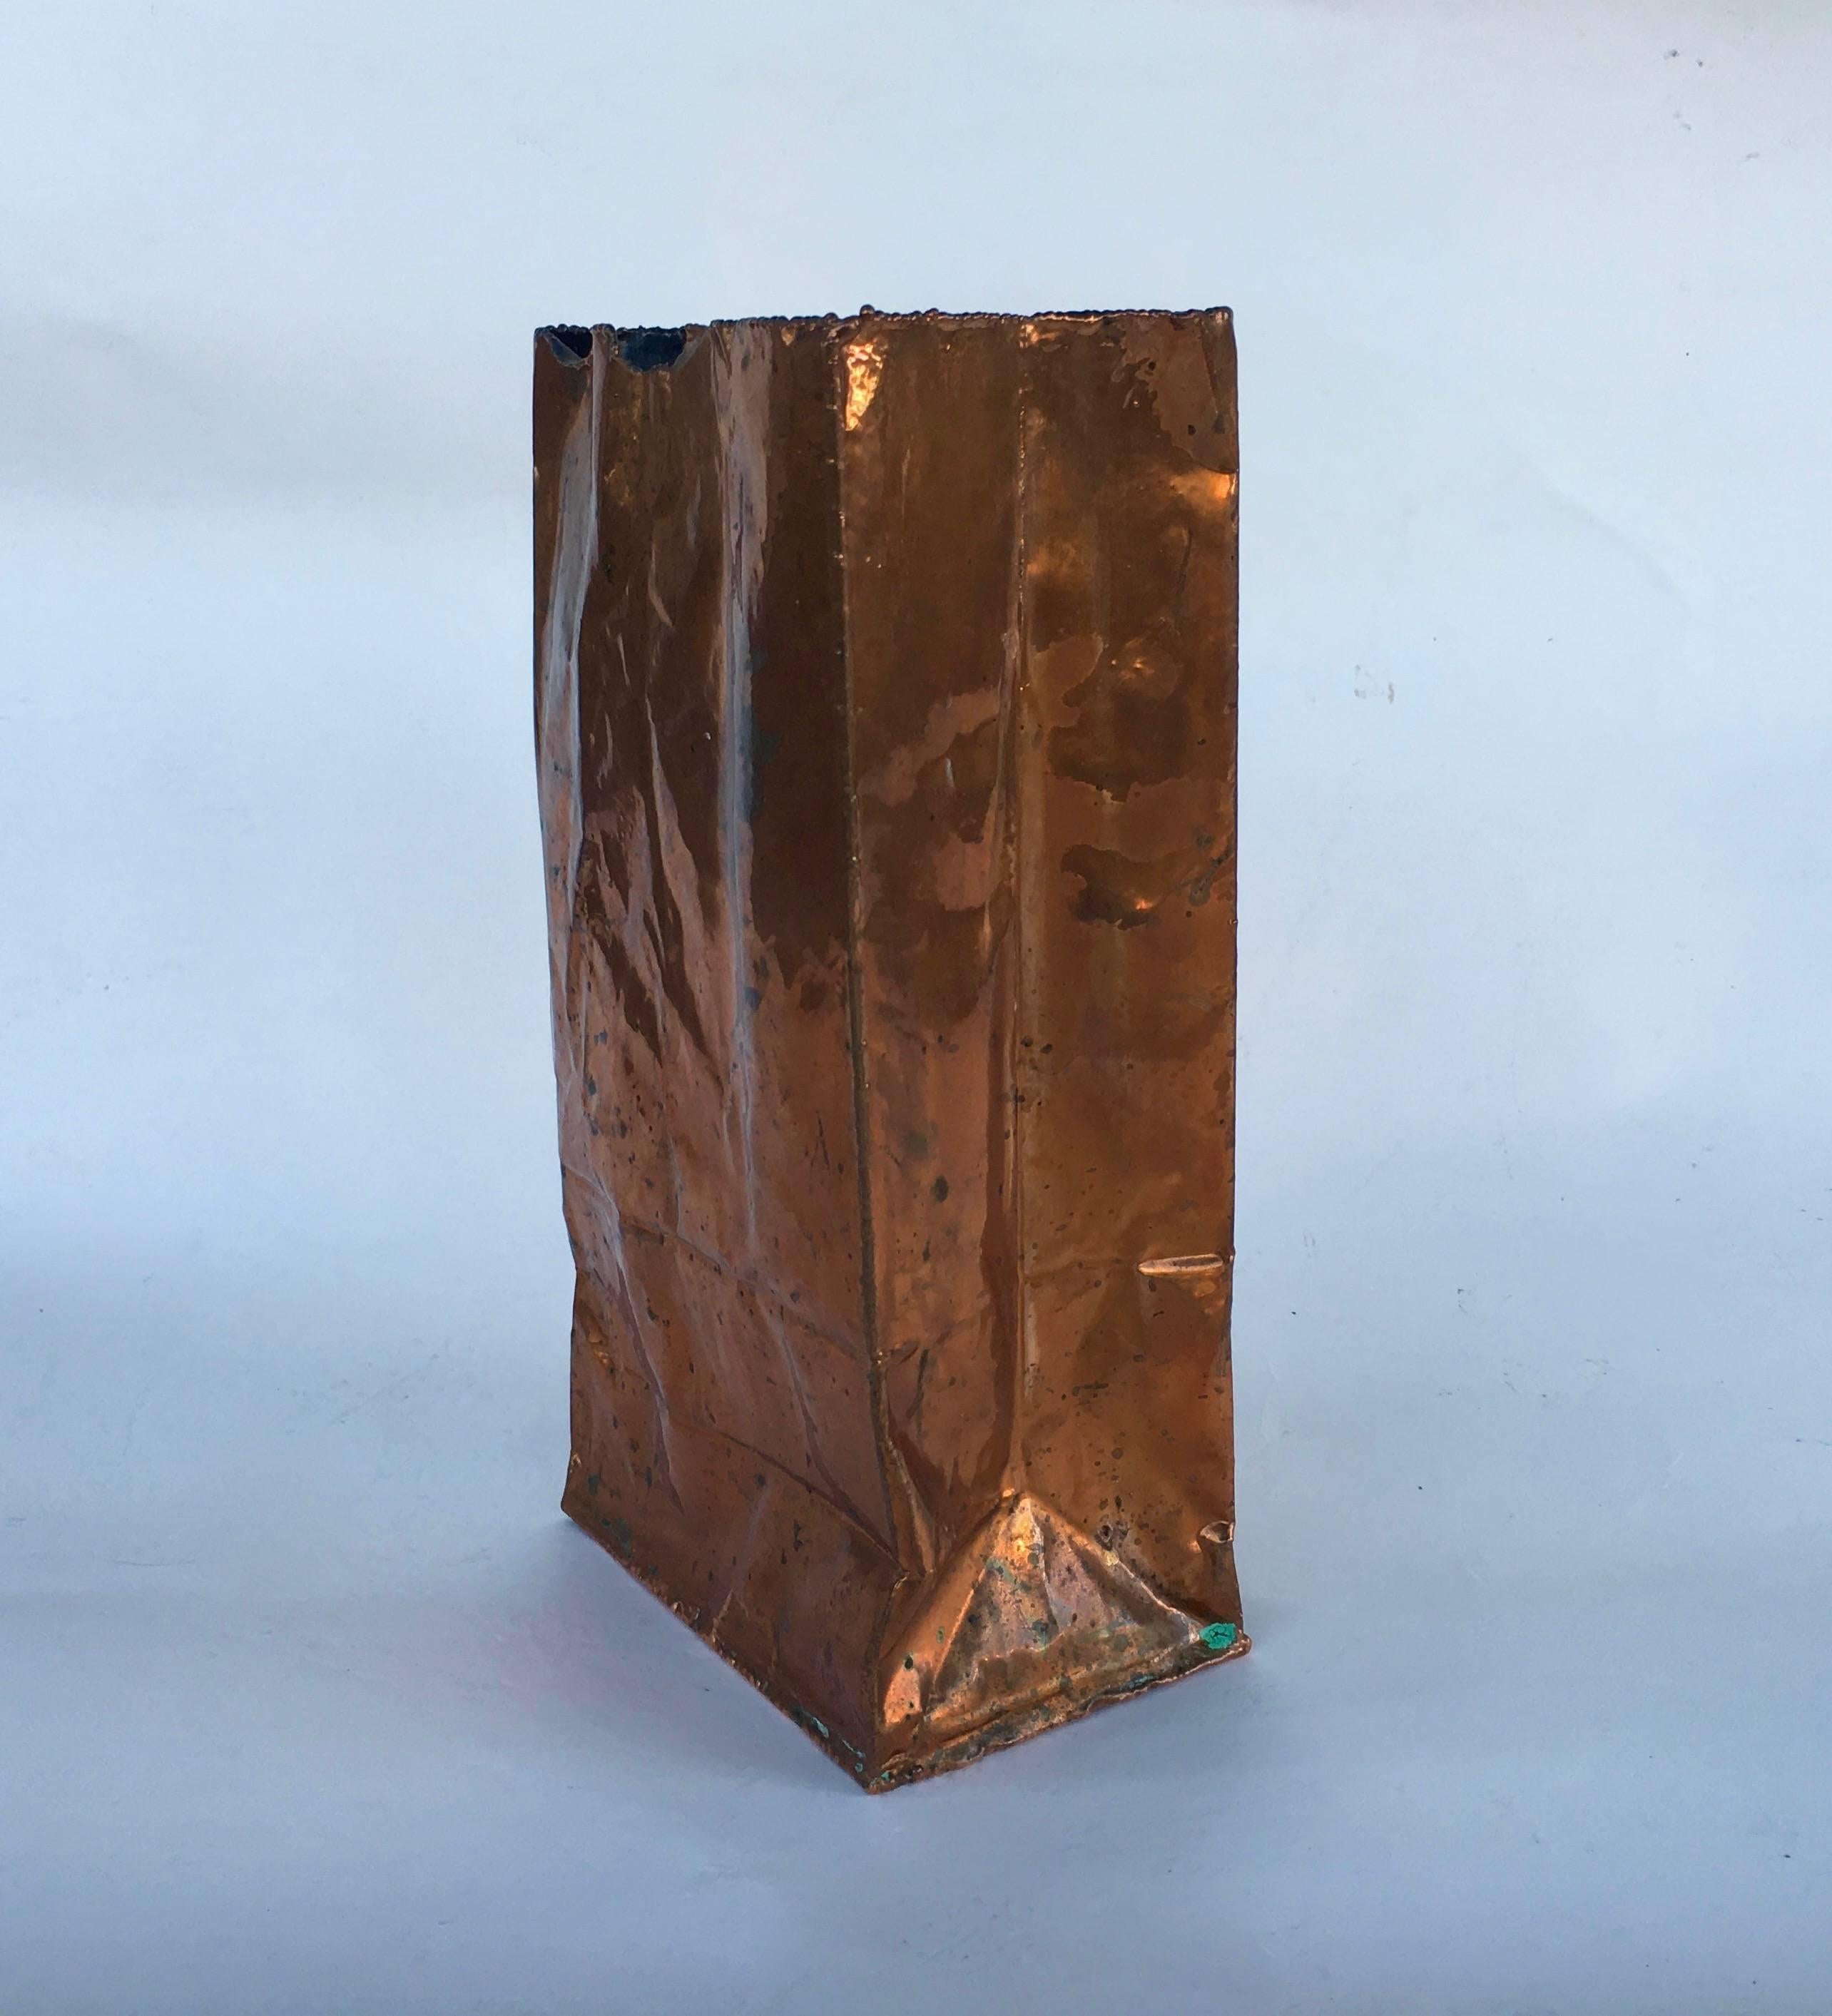 Kelly Wearstler.
Bronze bag,
2013.
Cast bronze, matte rose patina.
Measure: 10.75 x 5.25 x 3.5 inches.
California Bronze label underneath.

Kelly Wearstler is a Los Angeles based designer.